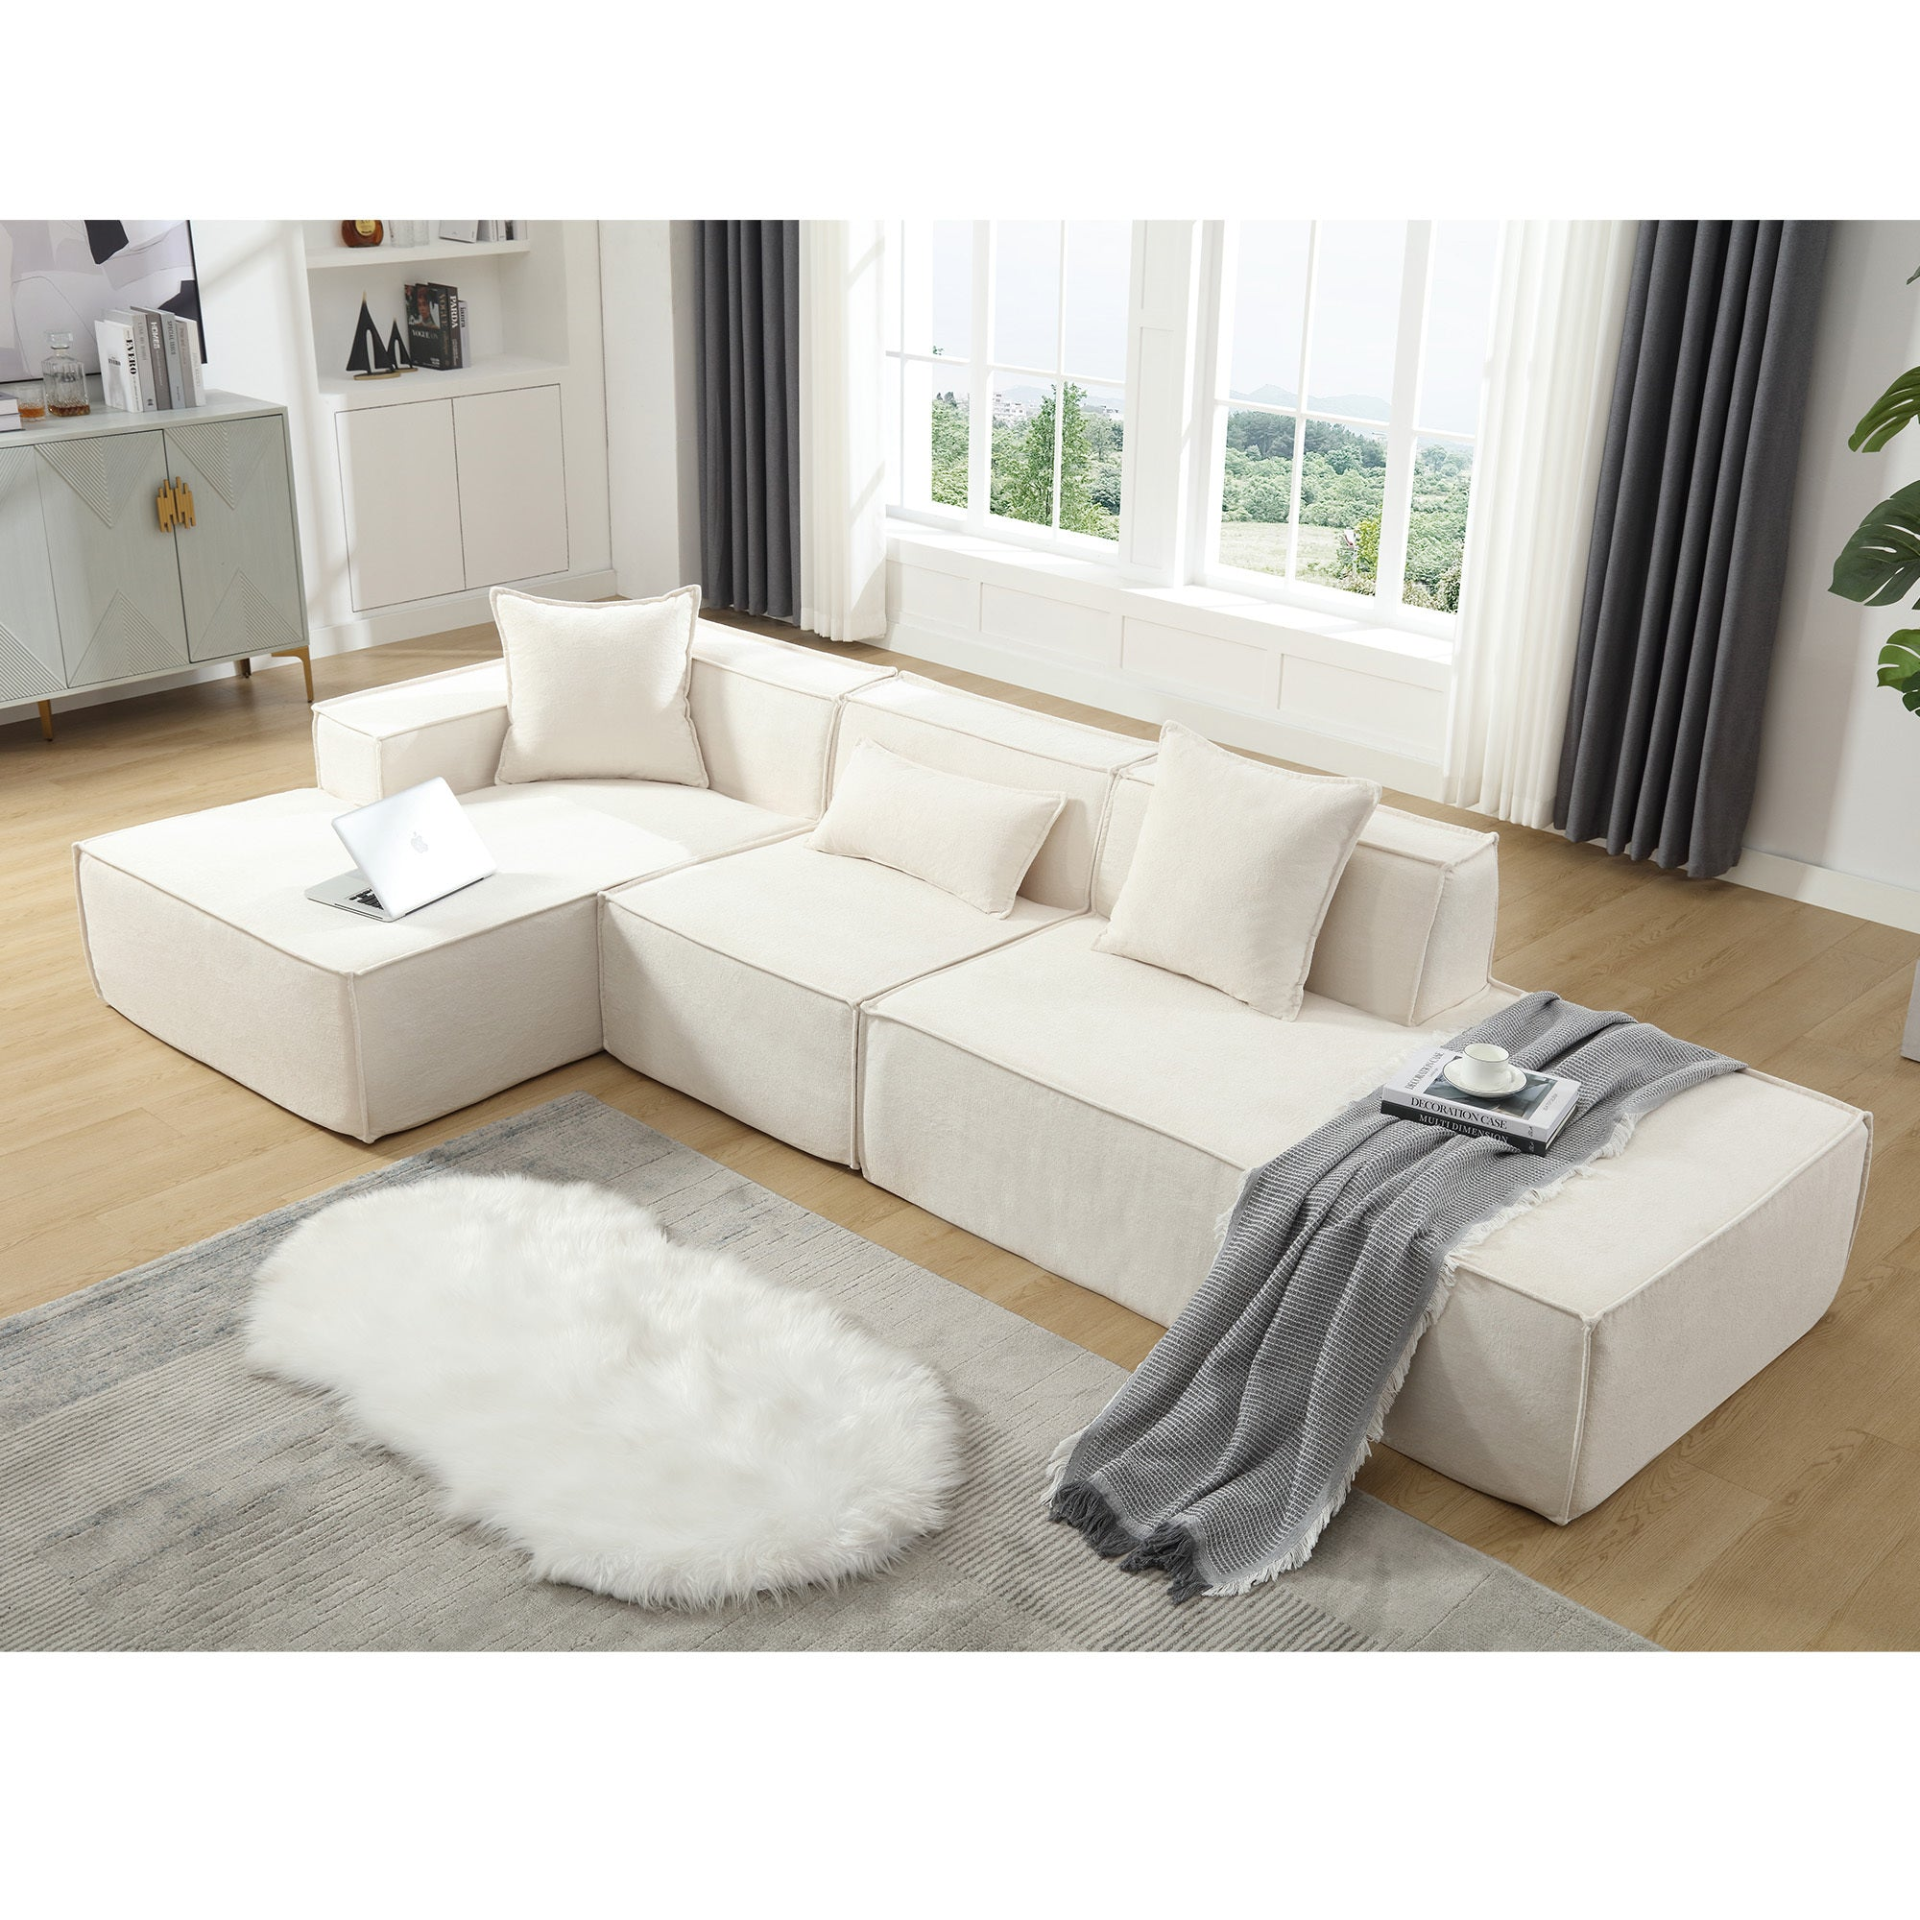 Modular combination living room sofa set, modern minimalist sofa, free installation sofa, L-shaped, Italian minimalist tofu block sofa, Beige, Goodies N Stuff